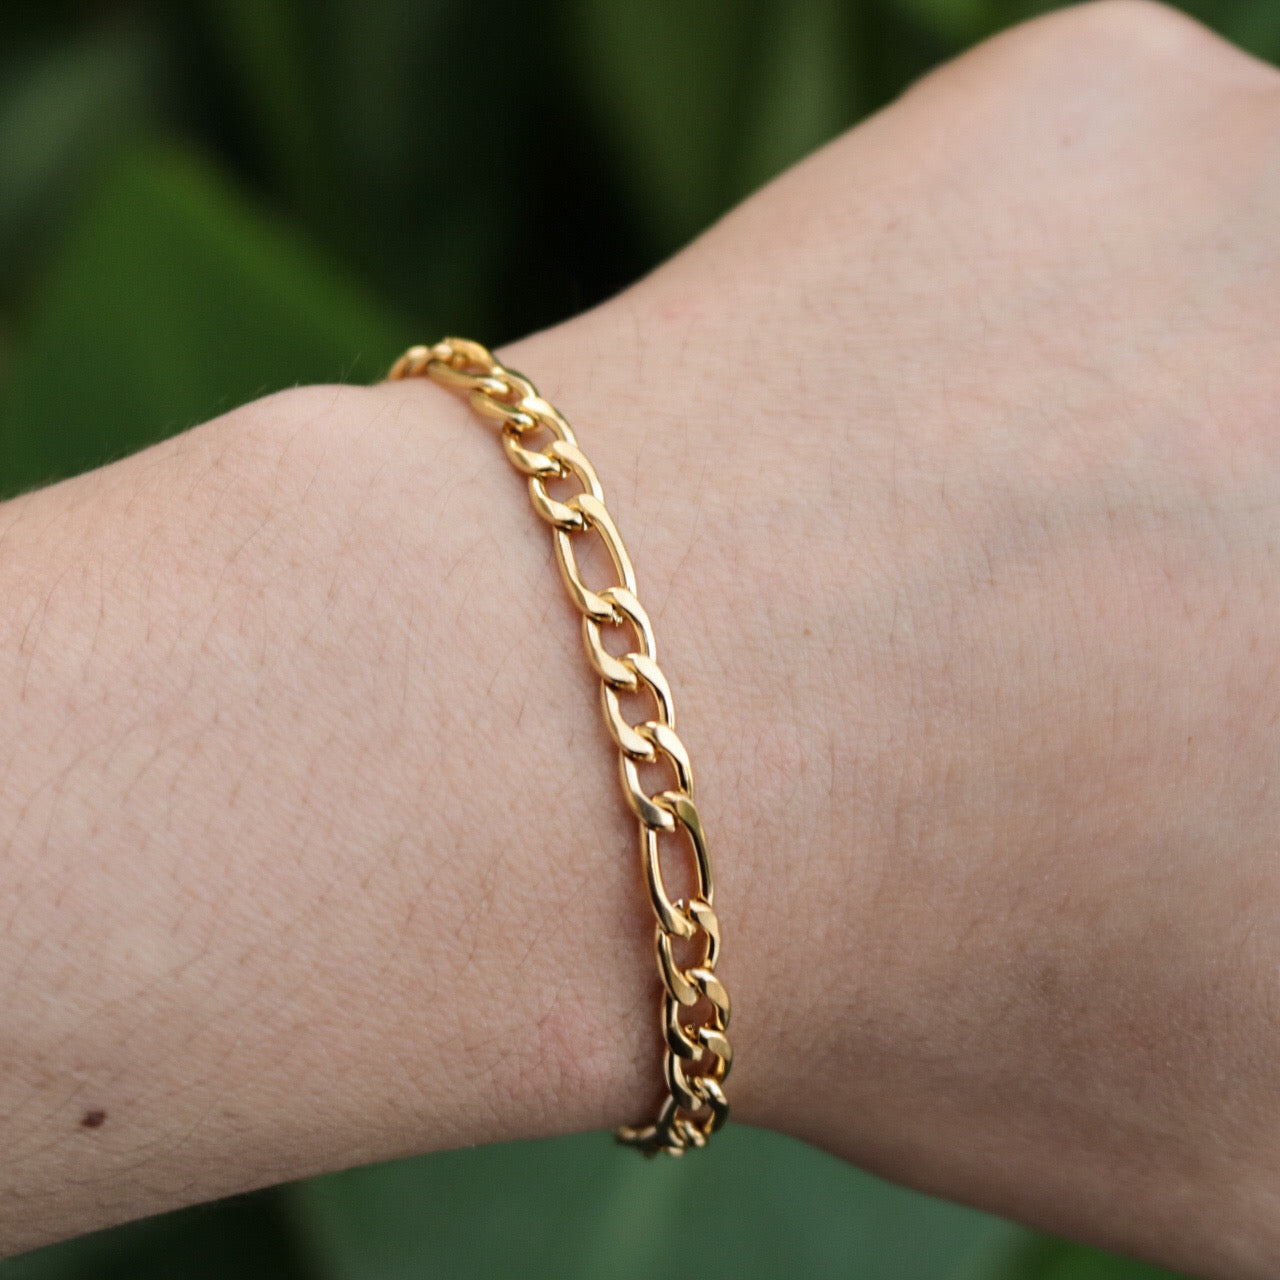 Buy Gold Stainless Steel 5.6mm Figaro Chain Bracelet Online - Inox Jewelry  India